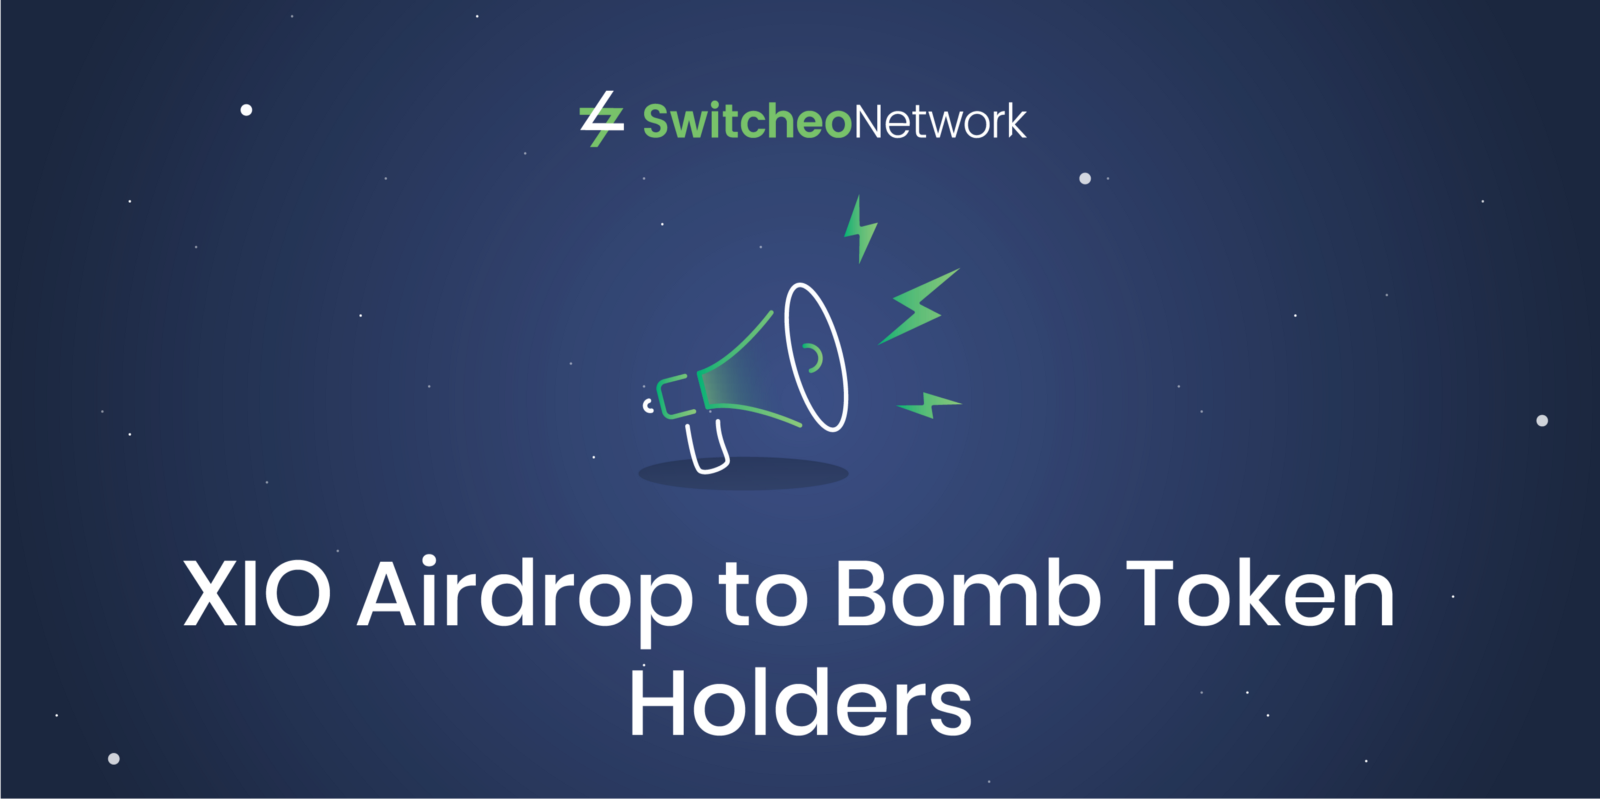 [IMPORTANT] XIO Airdrop to Bomb Token Holders